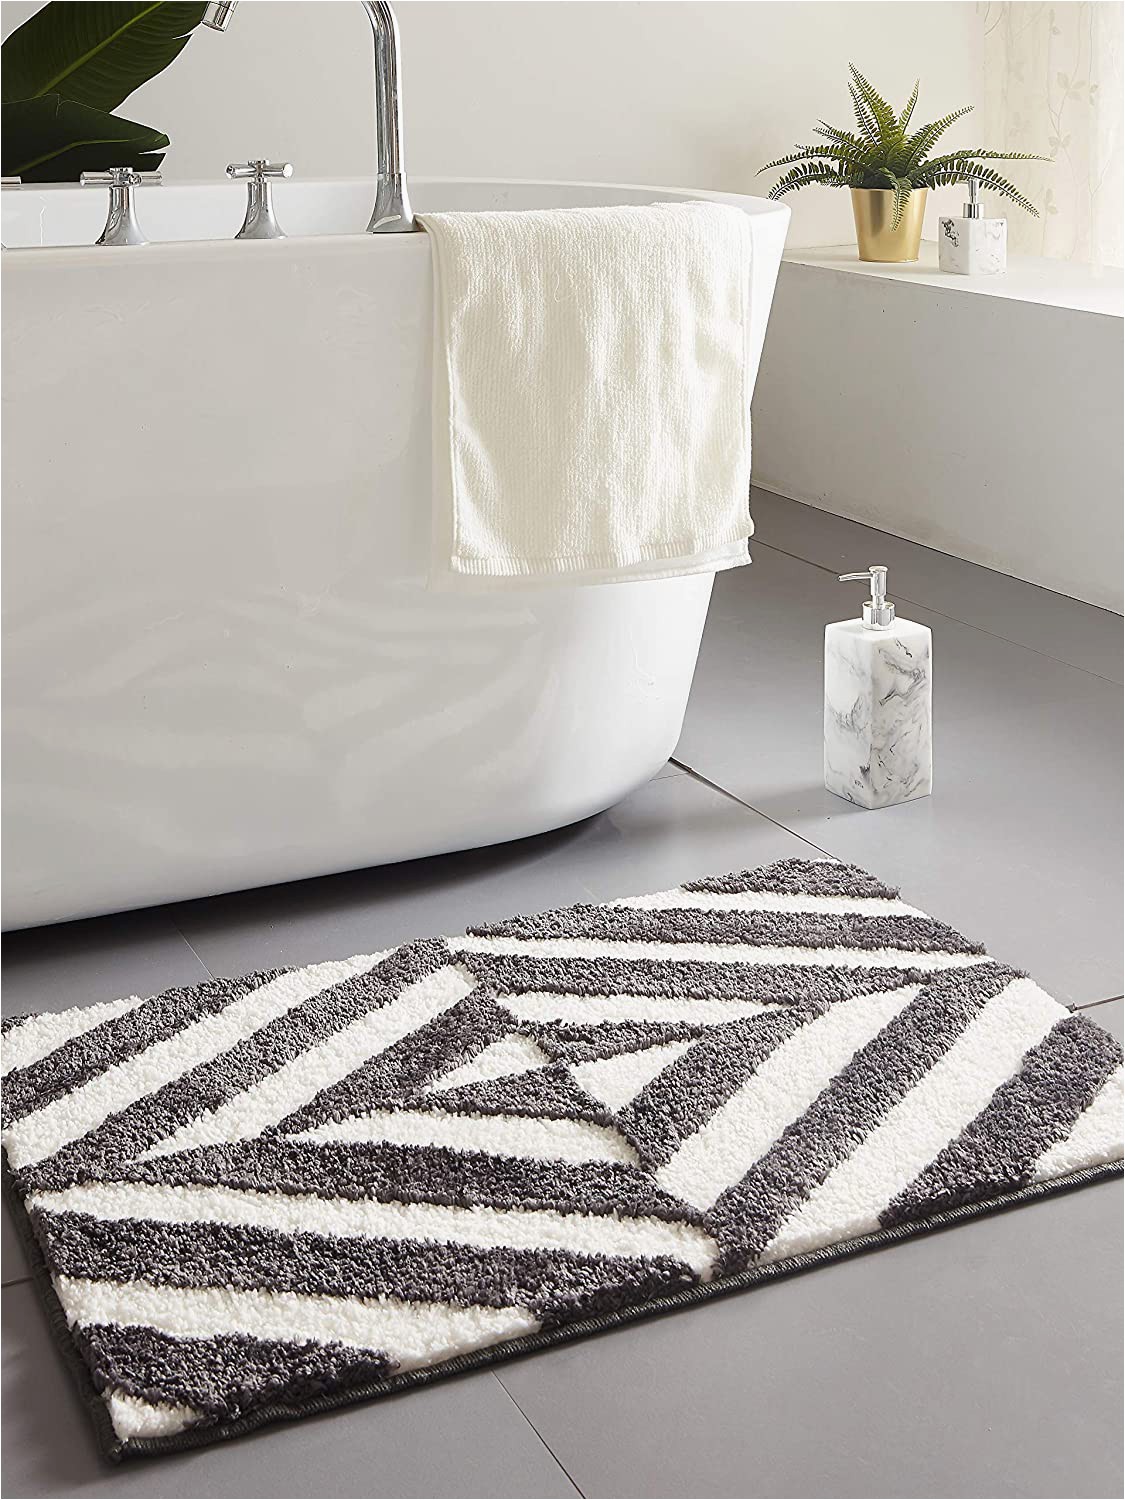 Bathroom Rugs and Bathmats Amazon Desiderare Thick Fluffy Dark Grey Bath Mat 31